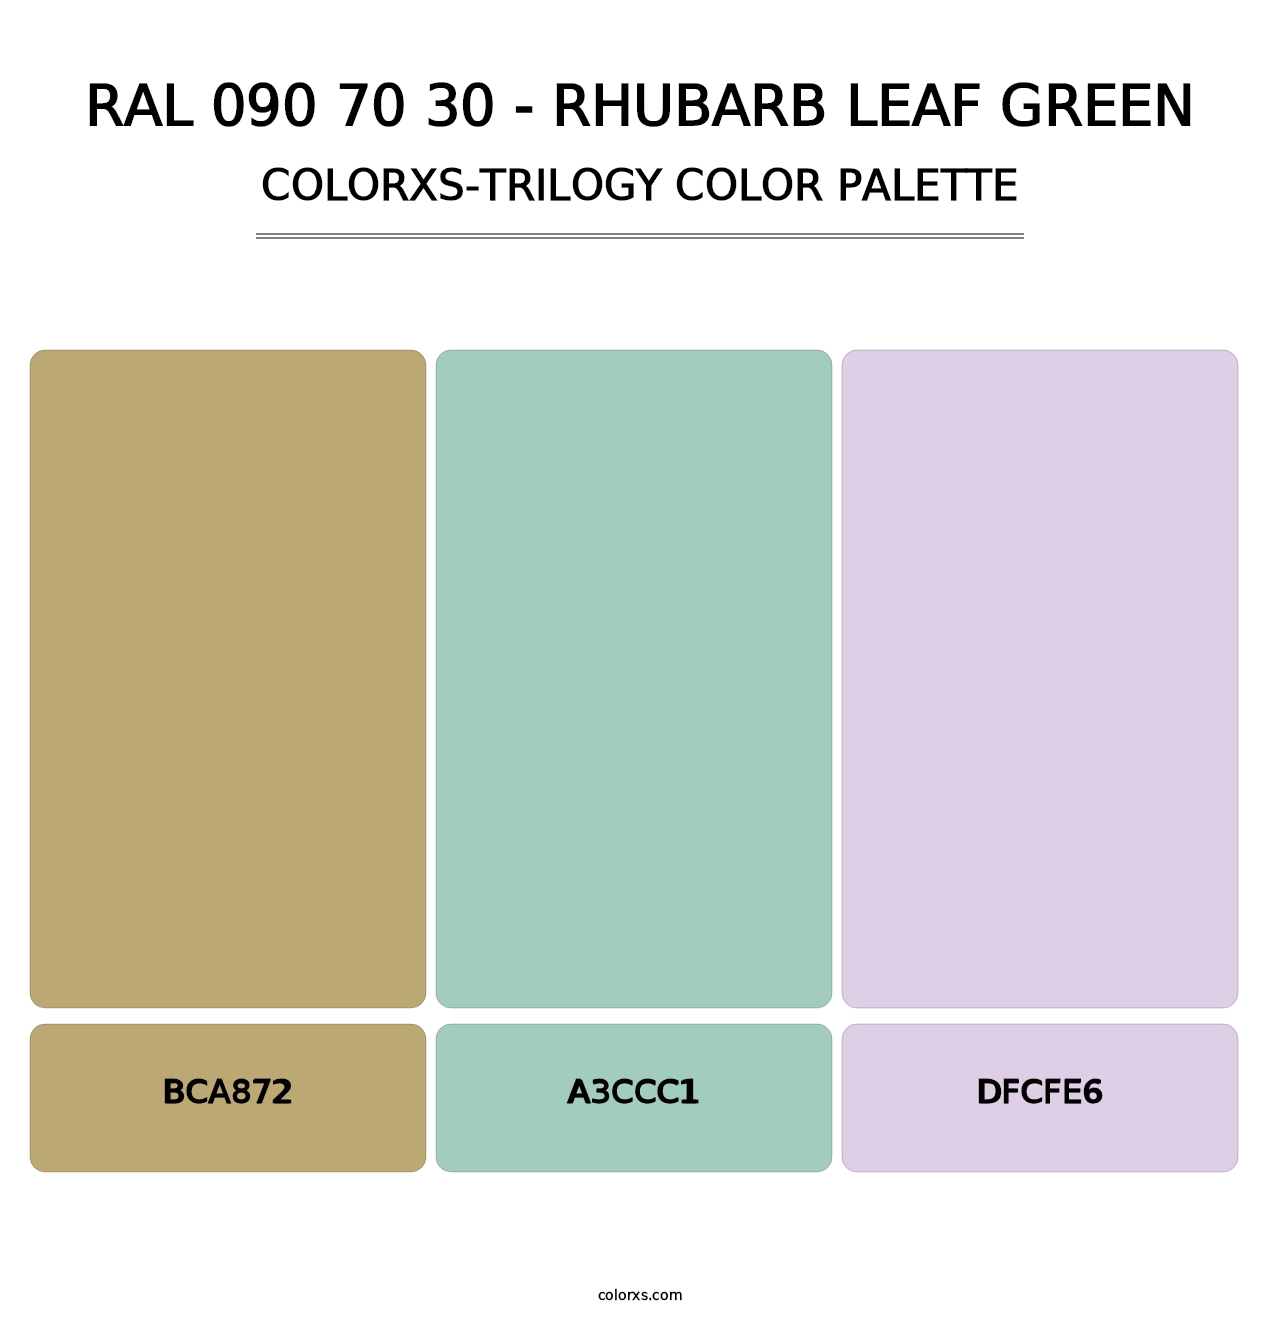 RAL 090 70 30 - Rhubarb Leaf Green - Colorxs Trilogy Palette